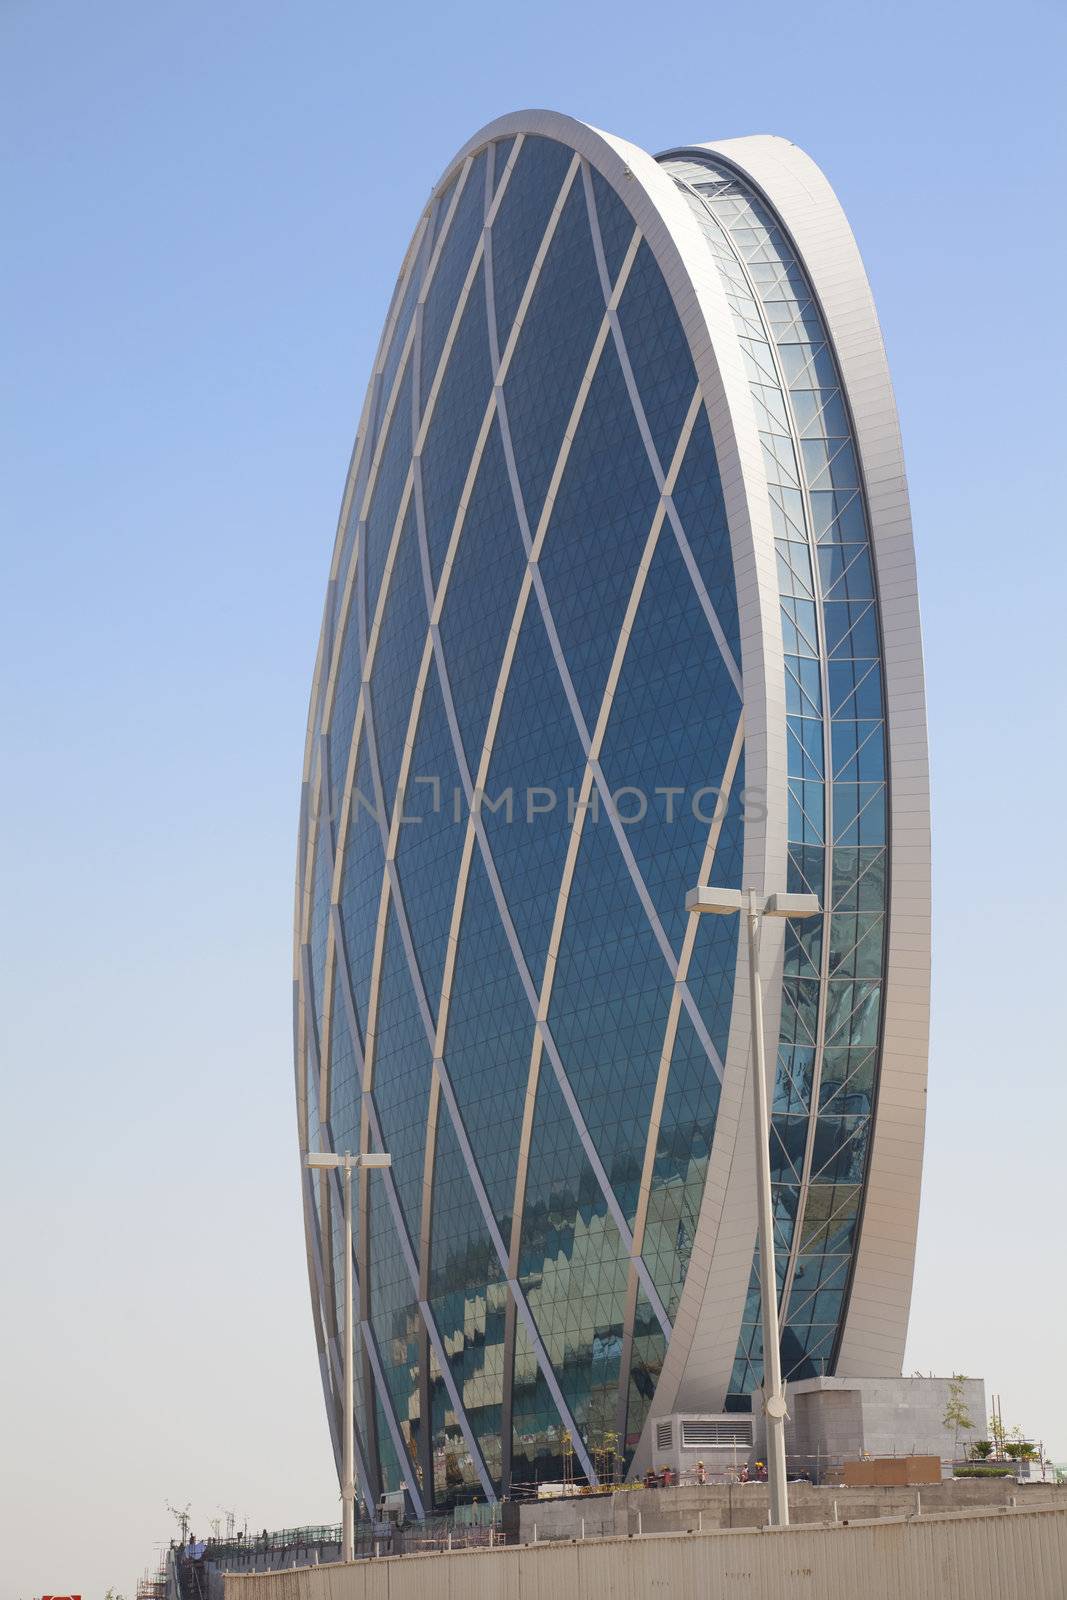 Saucer Shaped Building, Abu Dhabi, UAE by shariffc